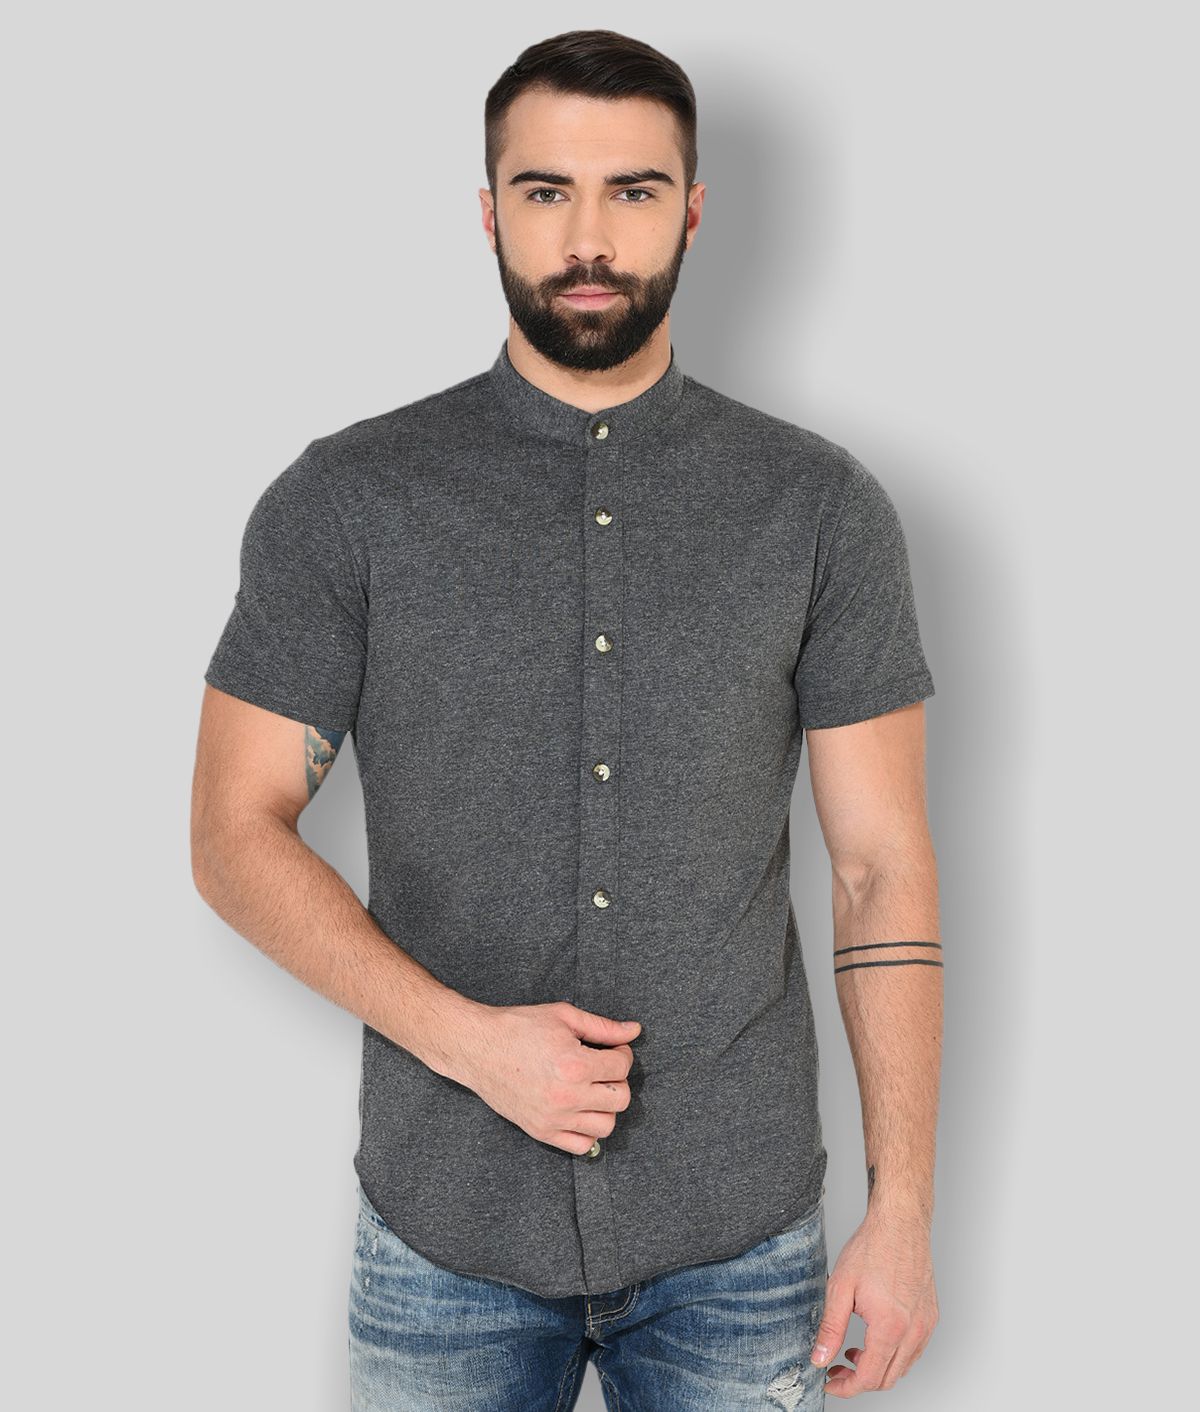     			Gritstones - Grey Cotton Blend Regular Fit Men's Casual Shirt (Pack of 1)